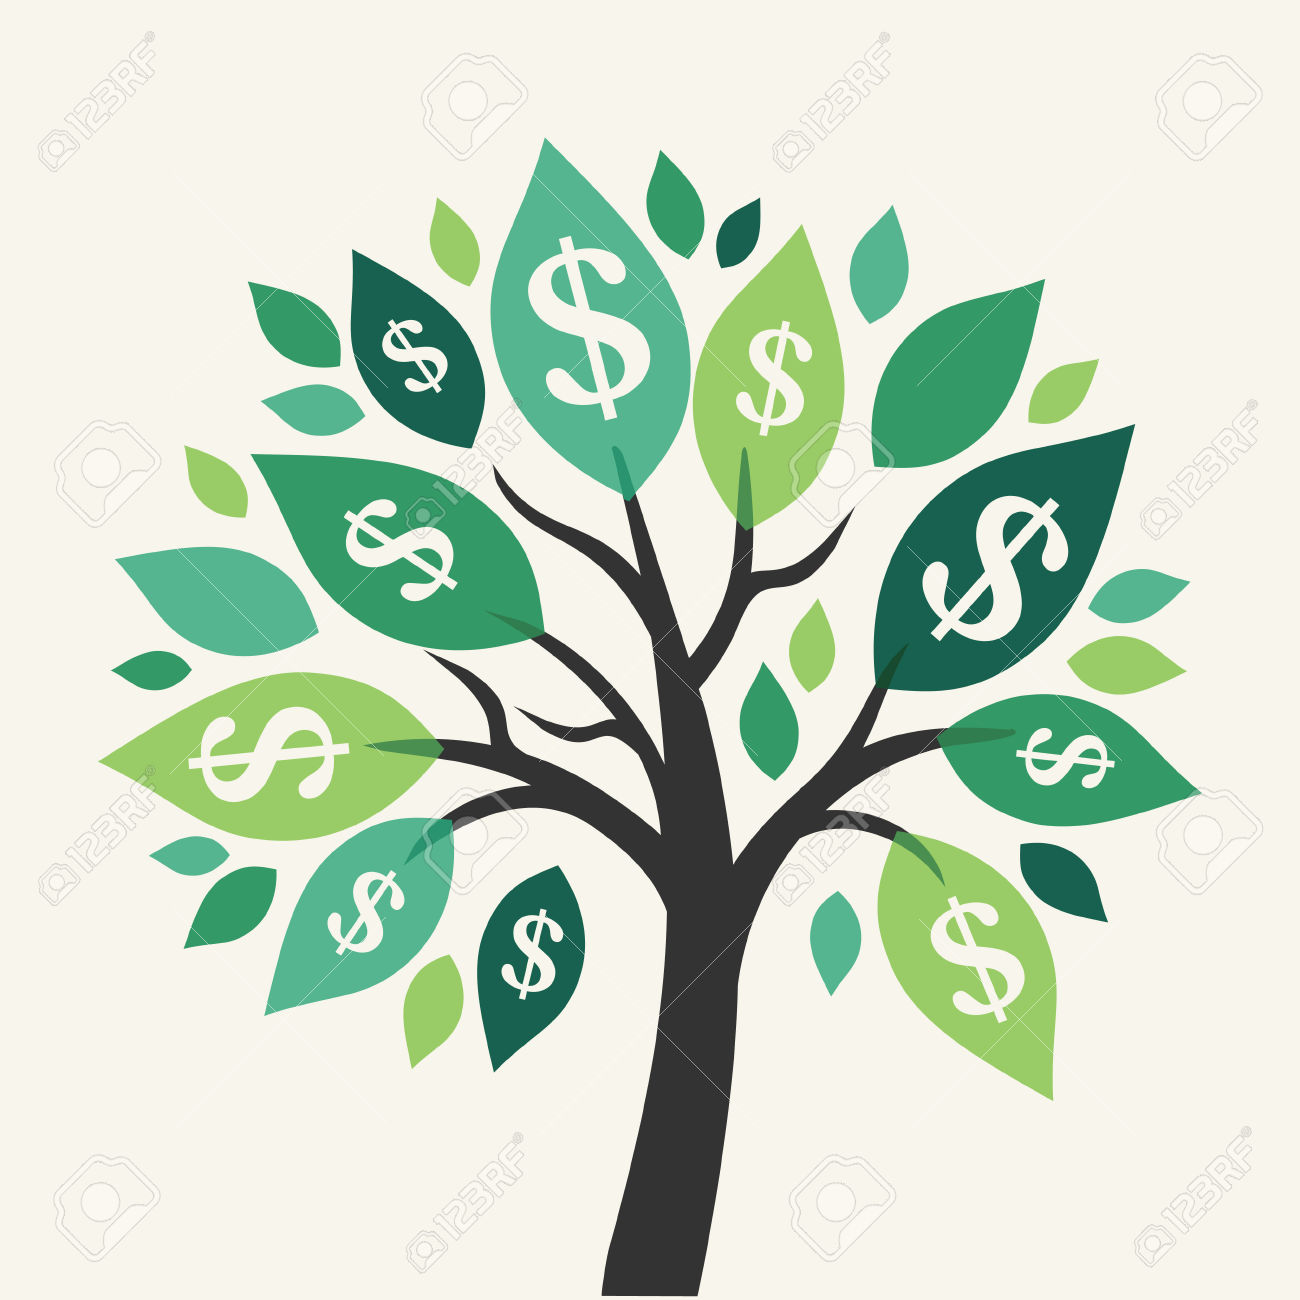 clipart of money tree - photo #27